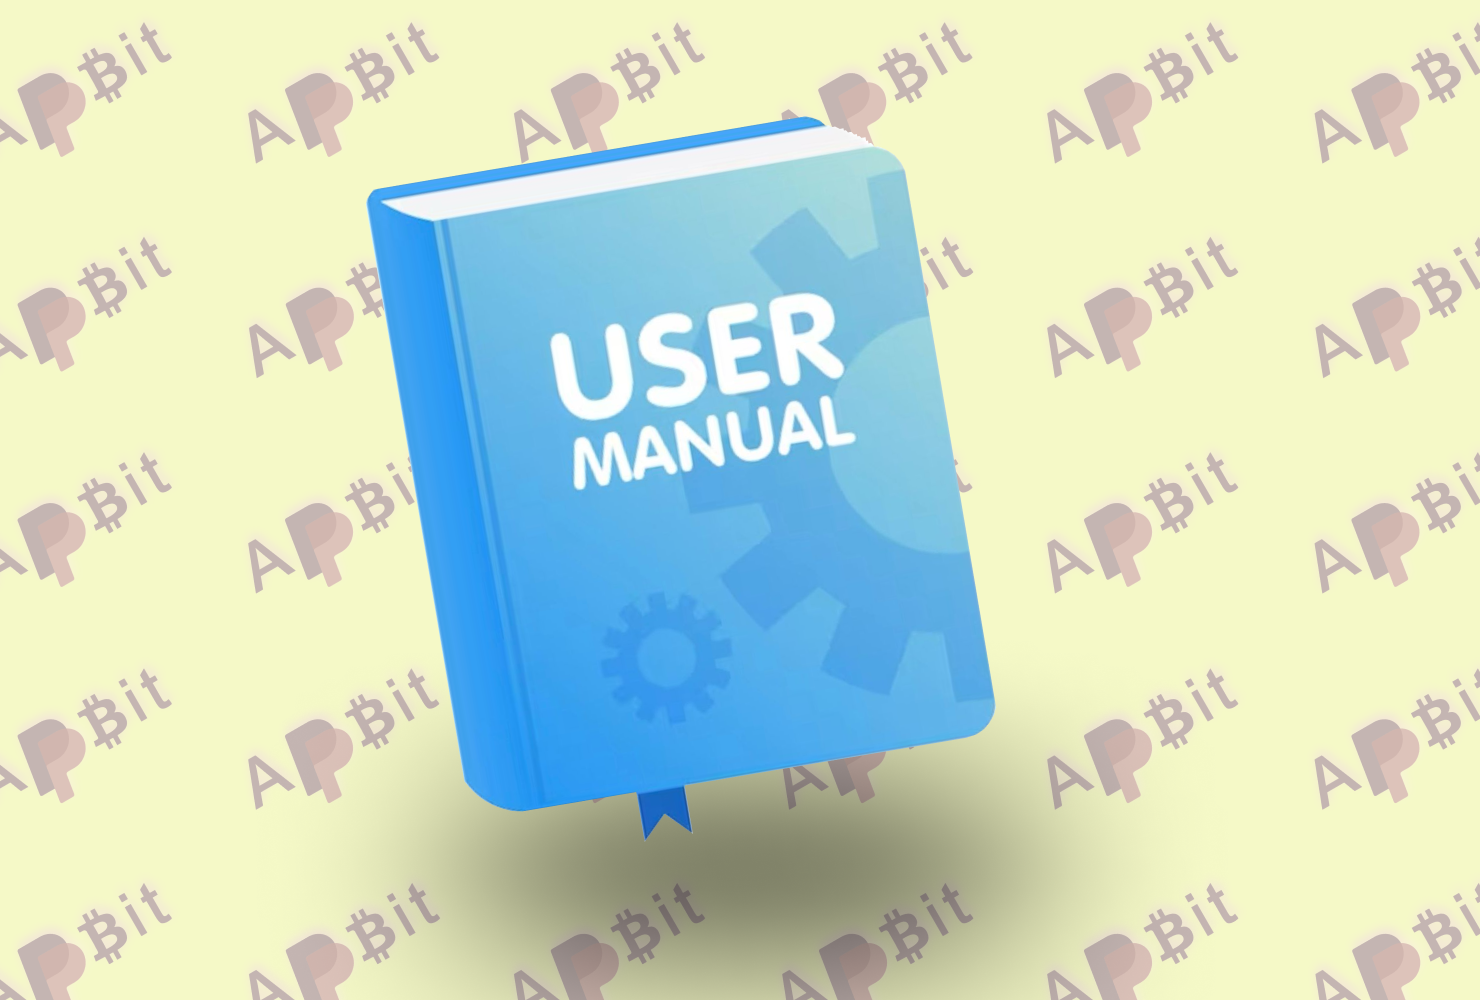 images/User manual.png